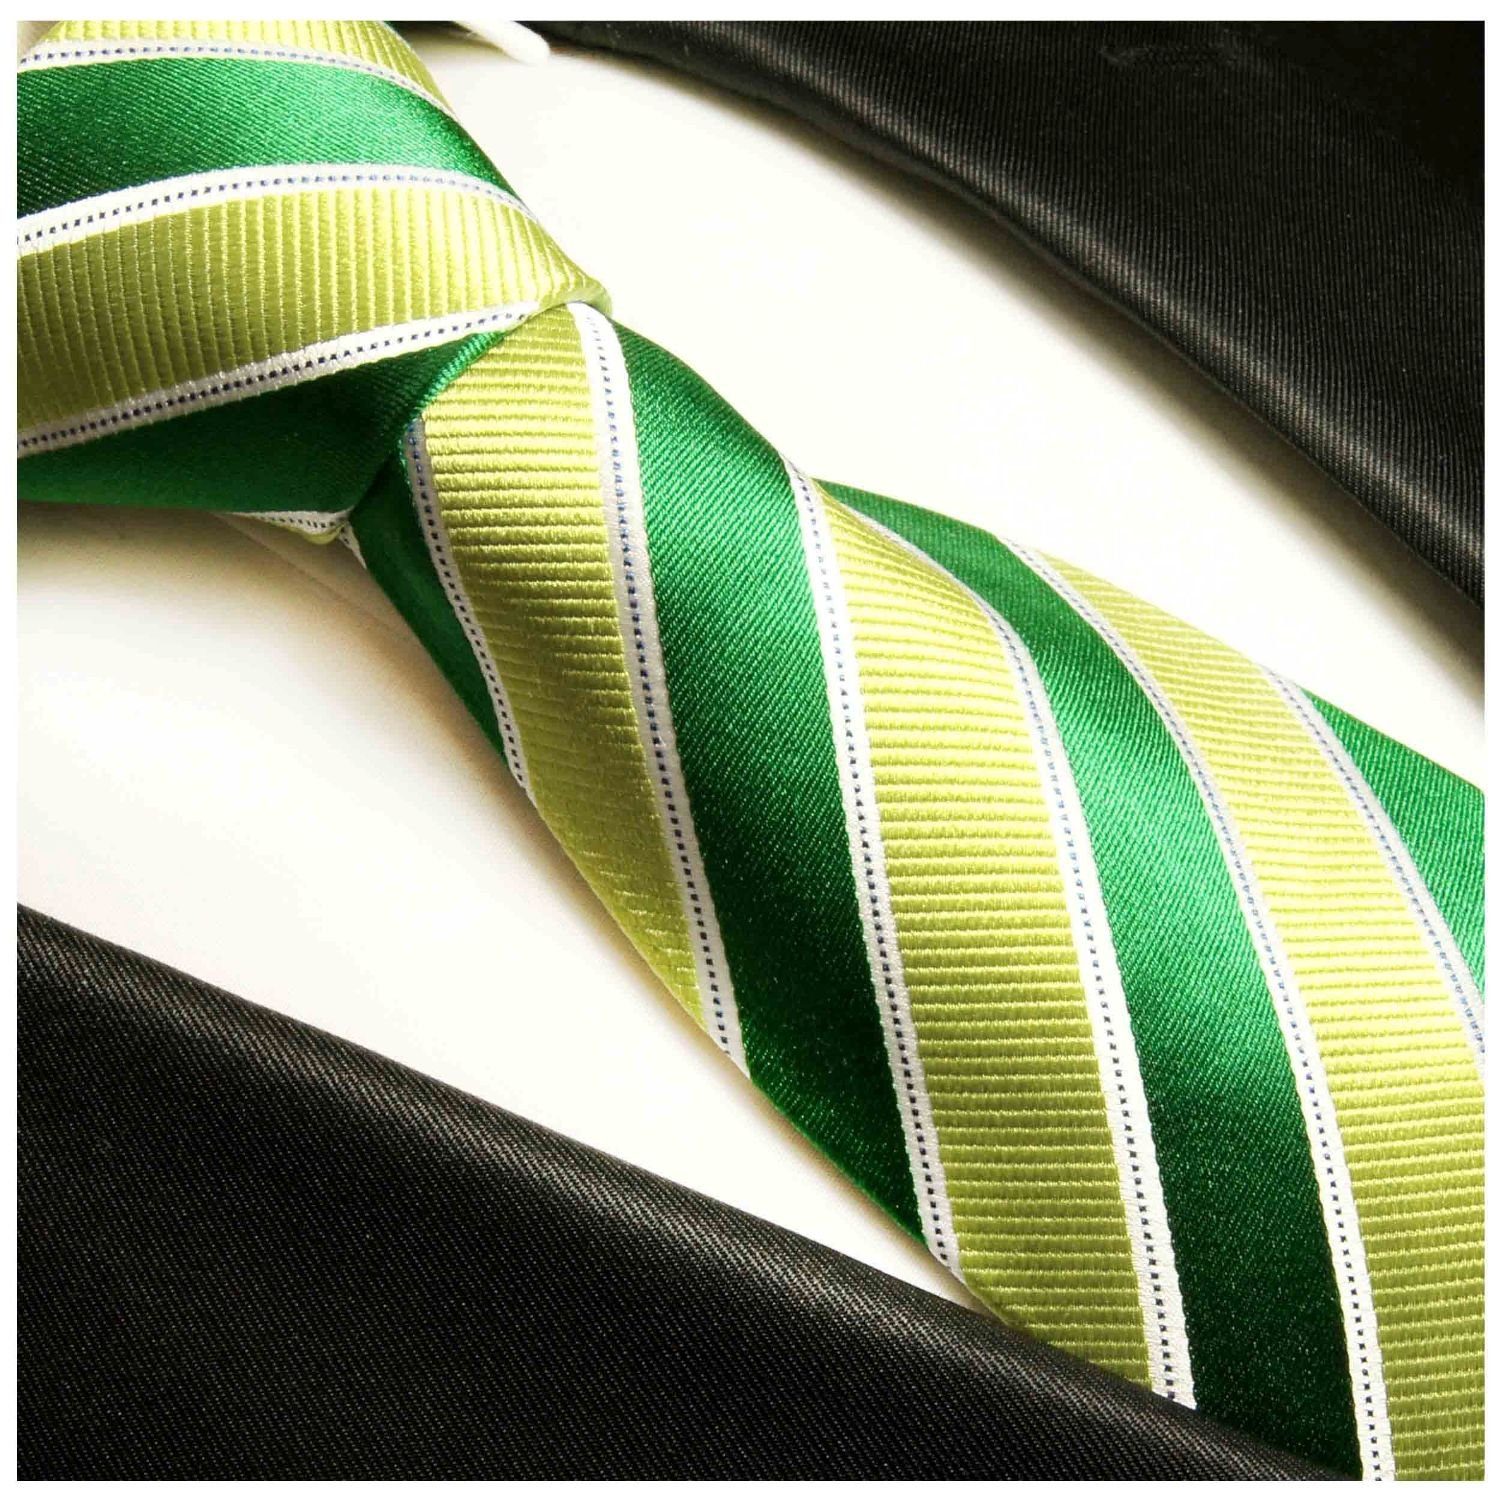 Paul Malone Krawatte Moderne Herren hellgrün Seide Seidenkrawatte grün Schmal gestreift 262 (6cm), 100